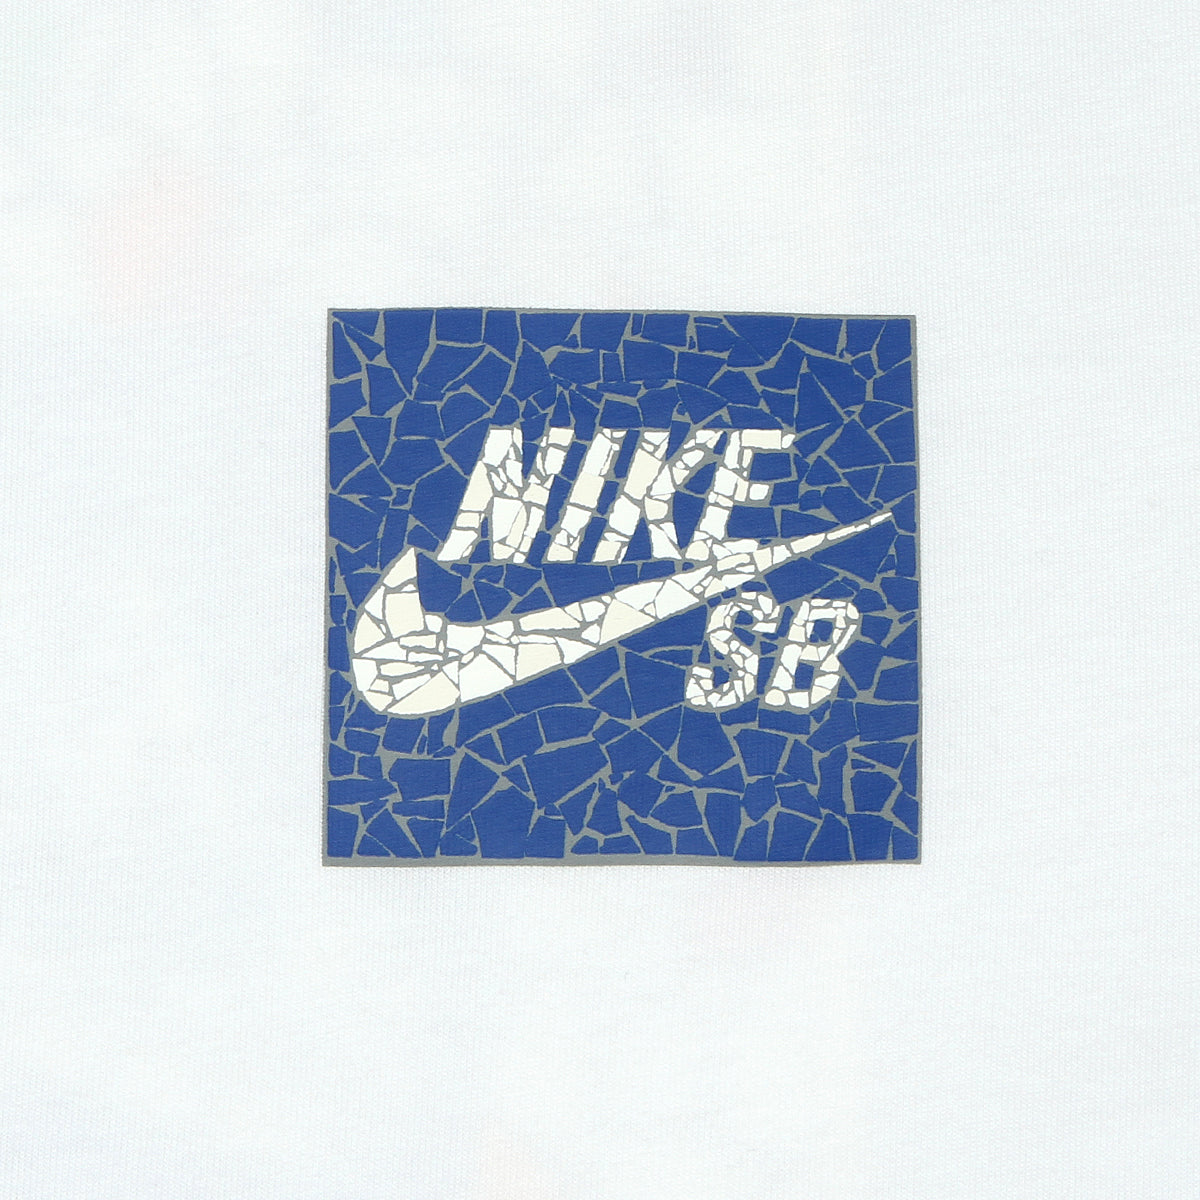 Nike SB Mosaic T-Shirt White